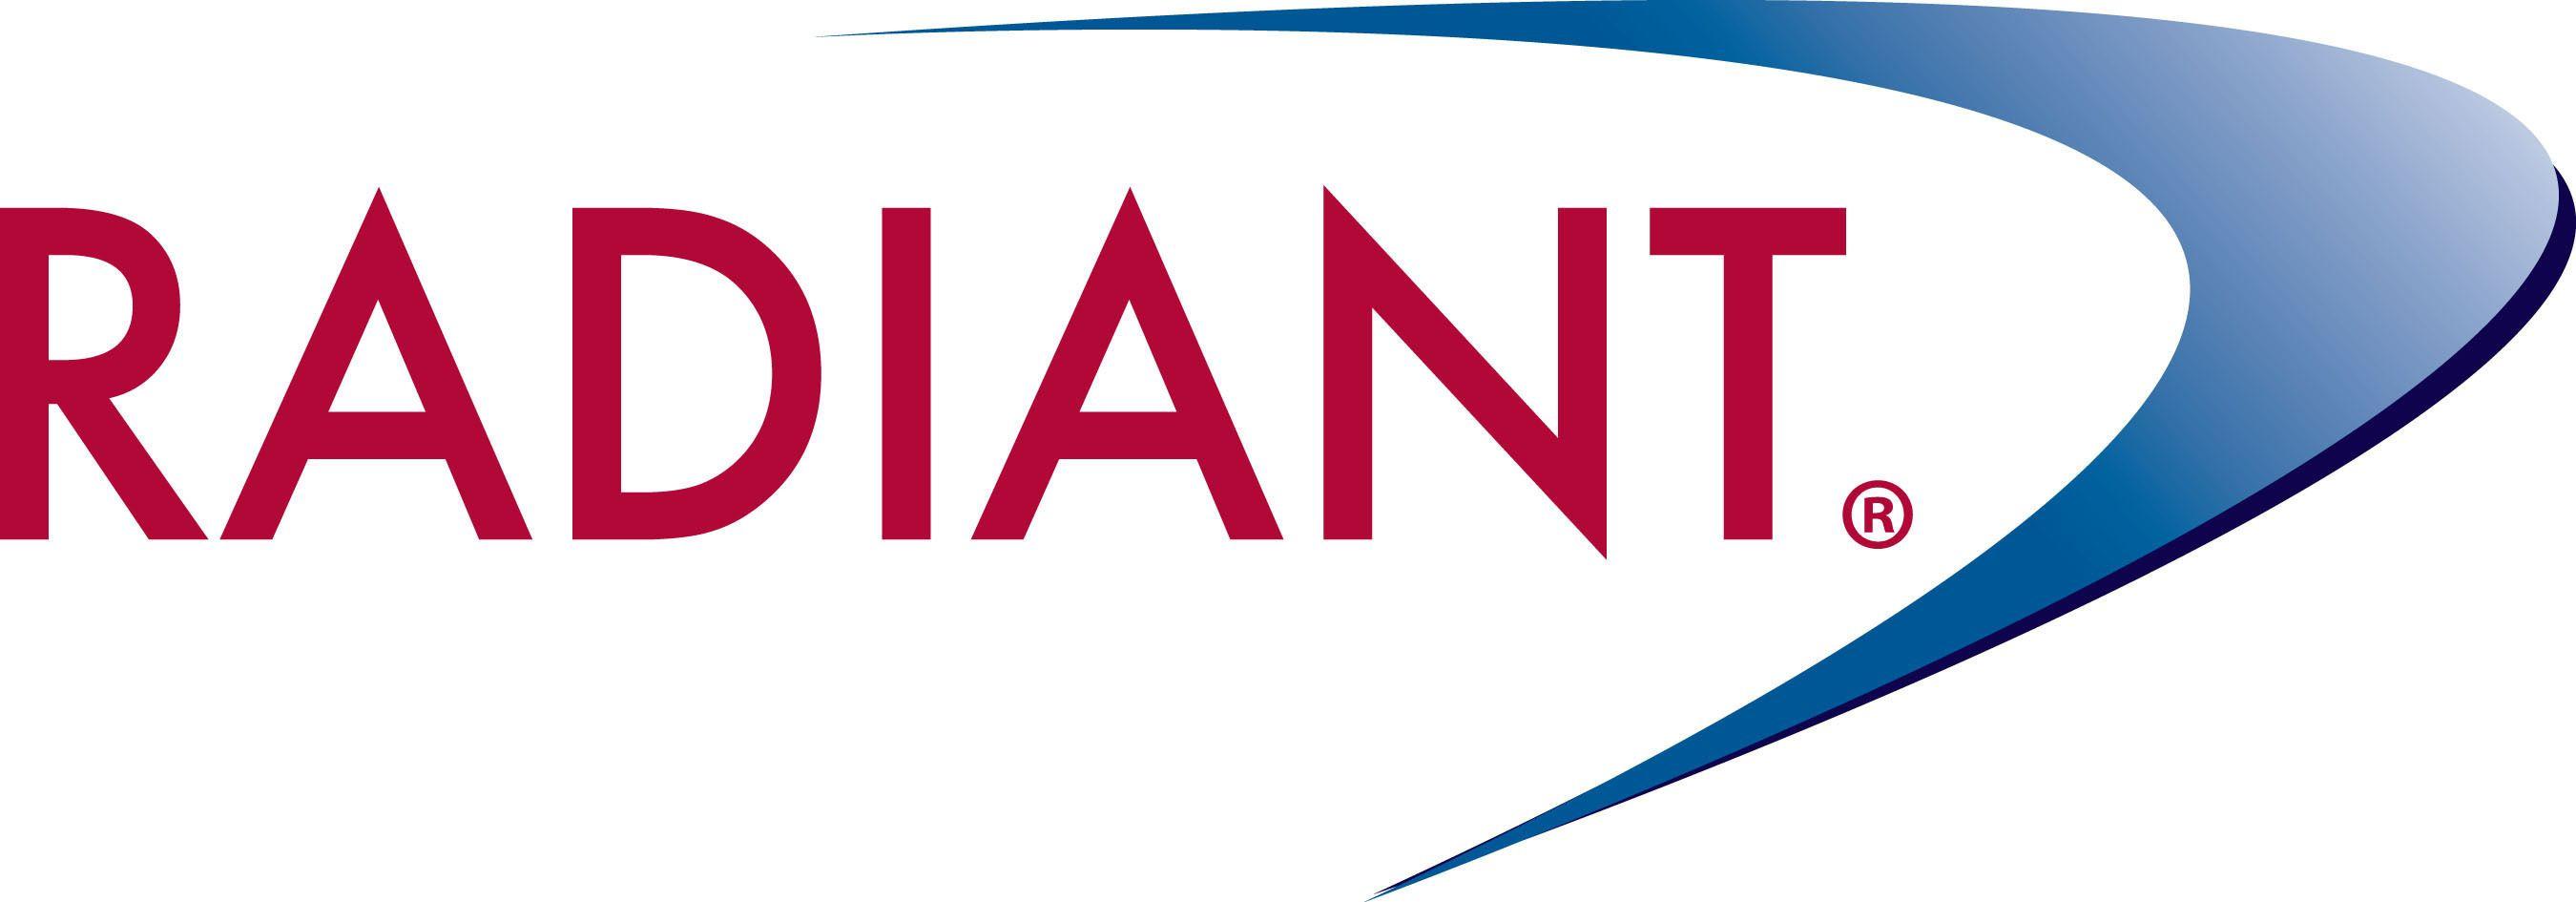 Radiant Logo - Radiant Logistics Acquires Highways and Skyways